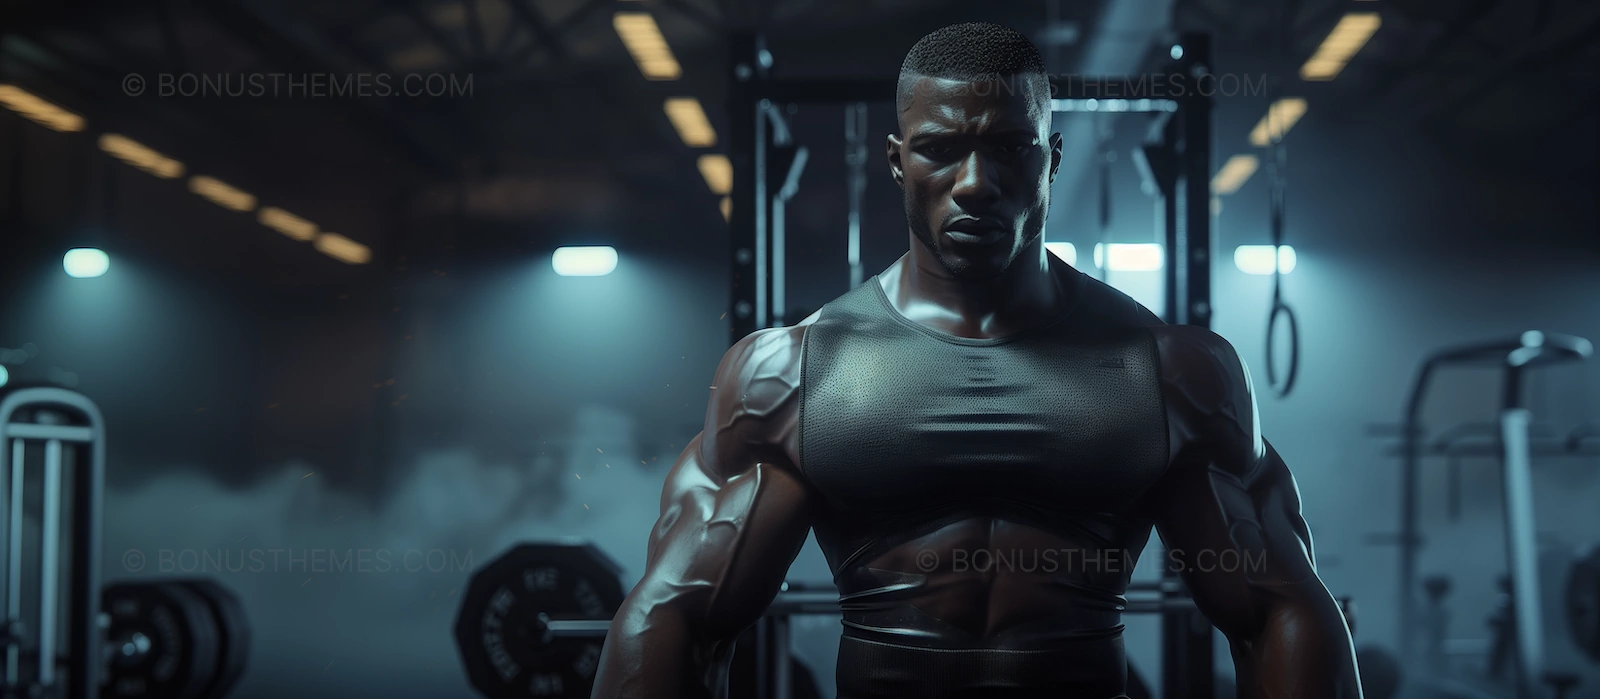 Focused gym avatar, determined man's strength